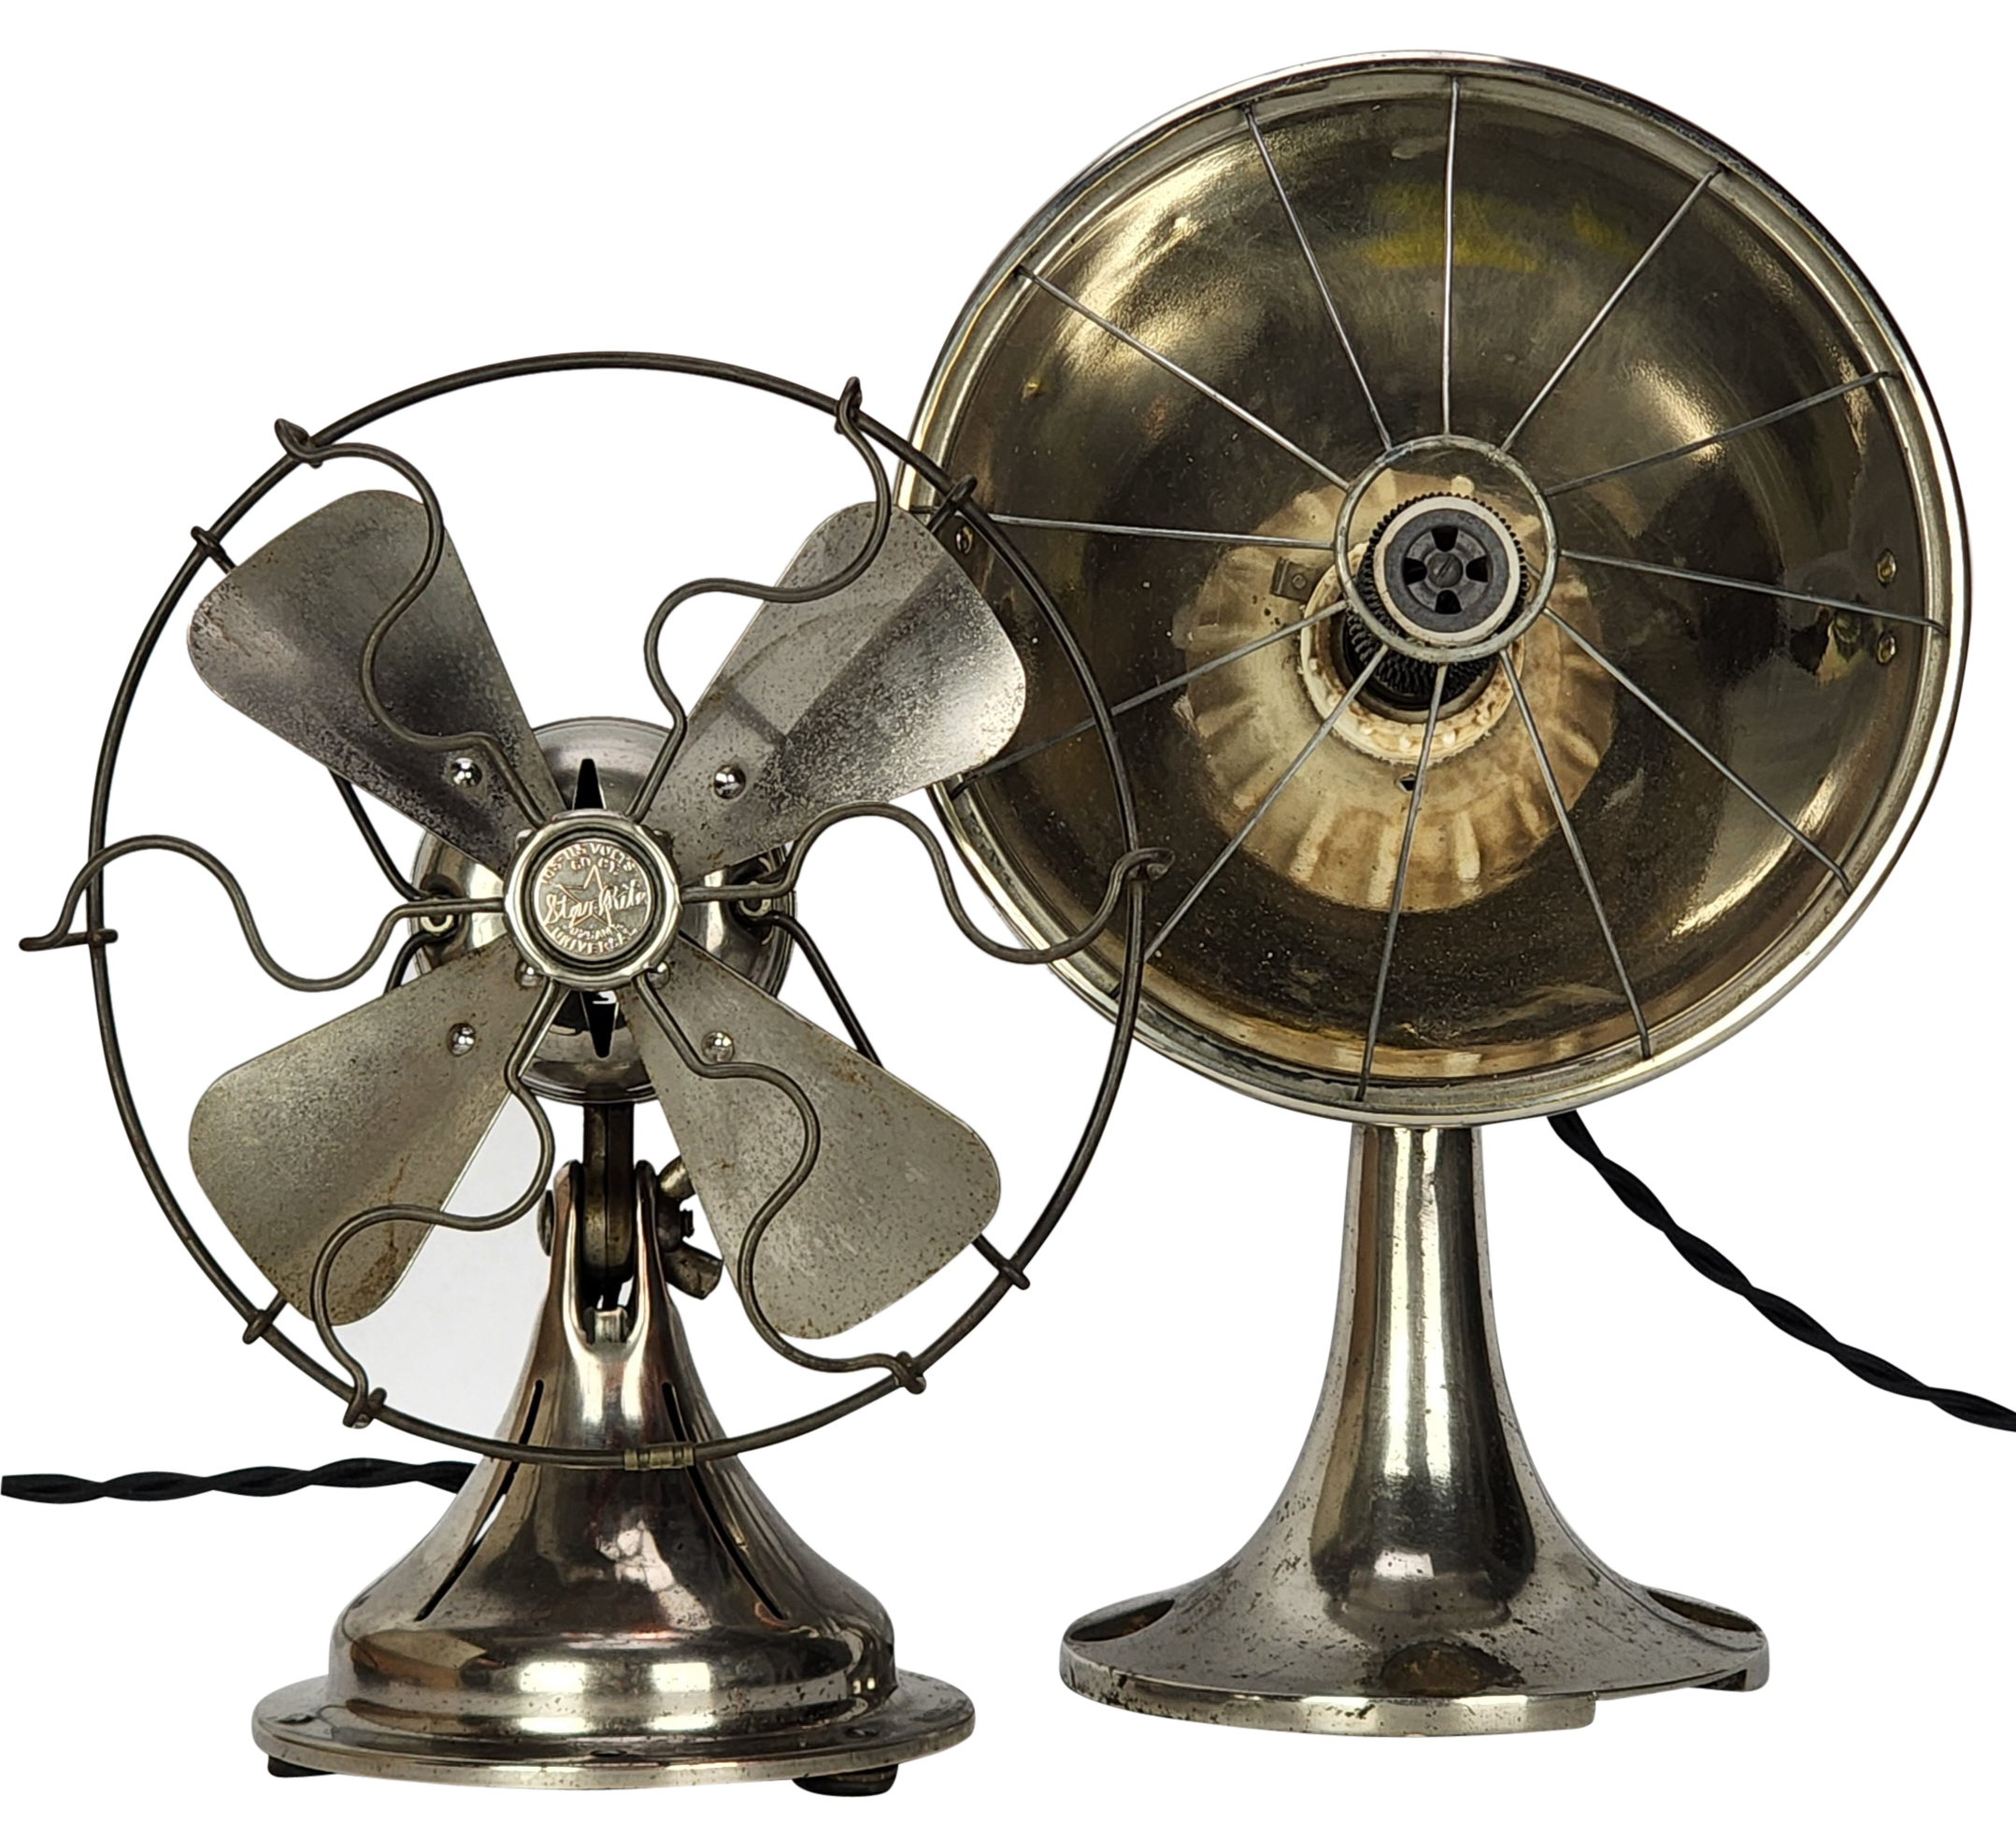 Circa 1920 Pair Dish Heater And 8" Desk Fan By Fitzgerald Mfg. Company Torrington Ct.